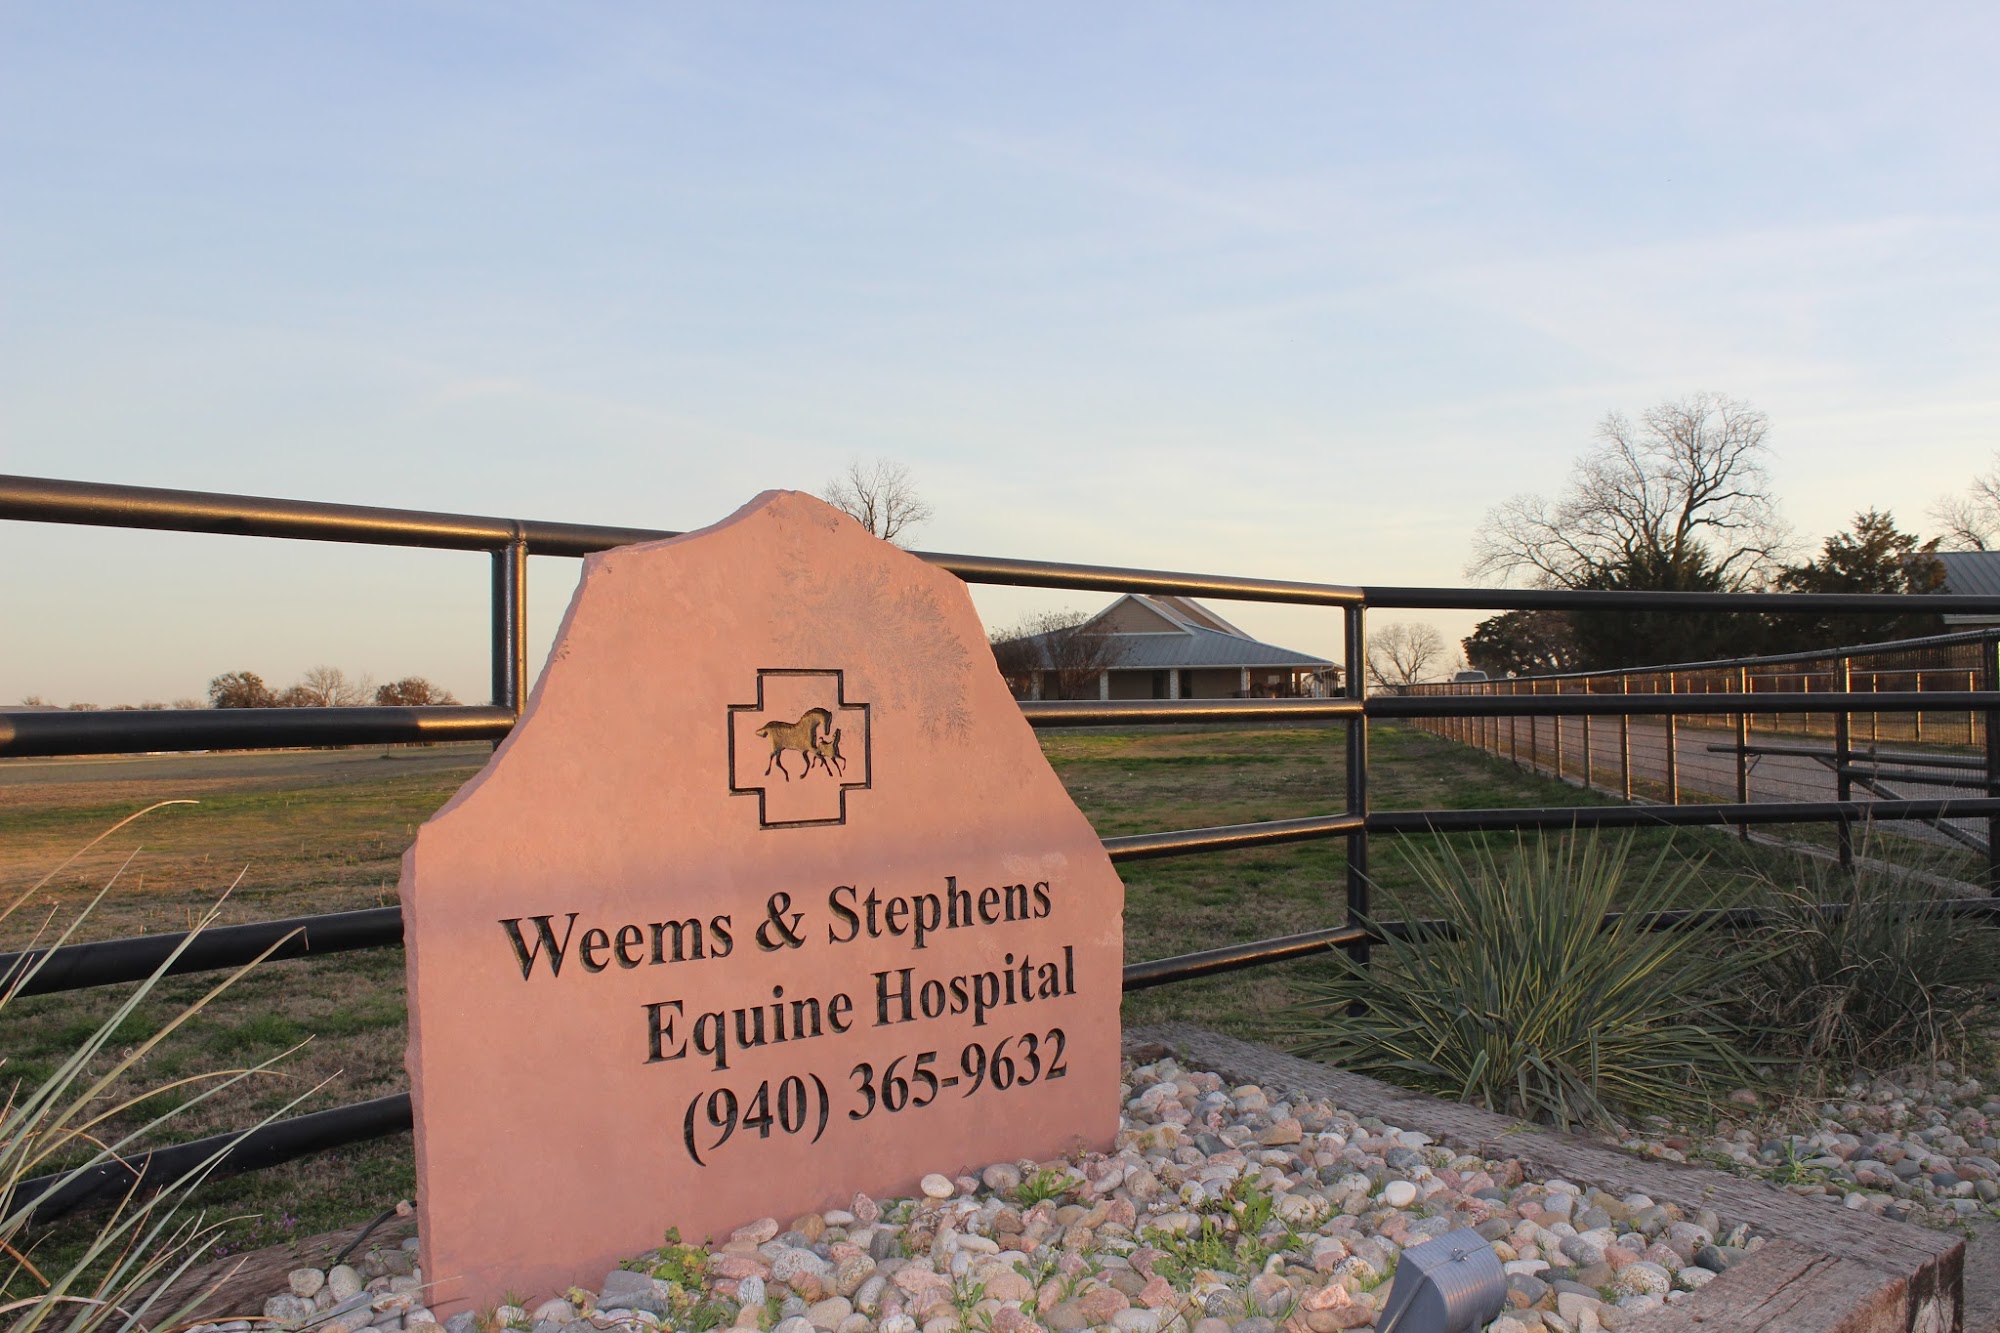 Weems & Stephens Equine Hospital